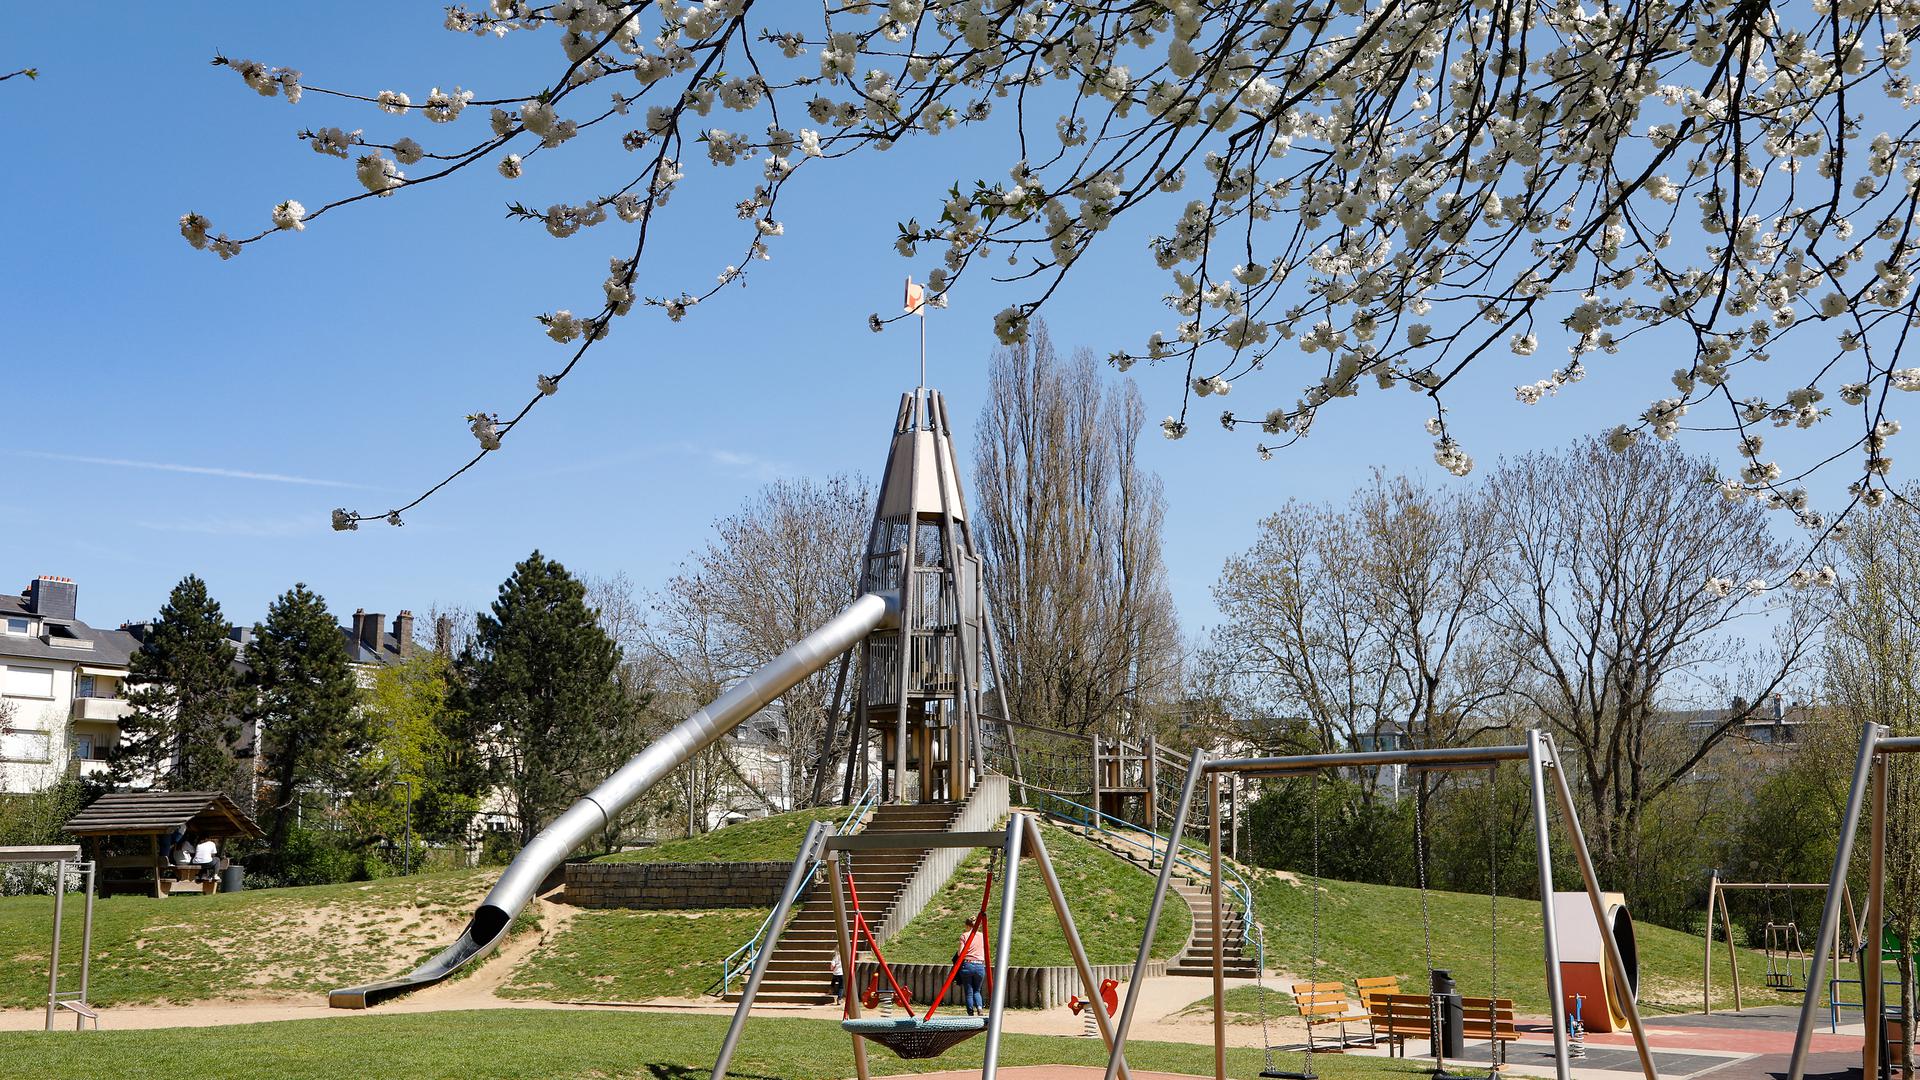 The 8000sqm Merl Park will undergo refurbishment to include a splash pad a bike track and a picnic area